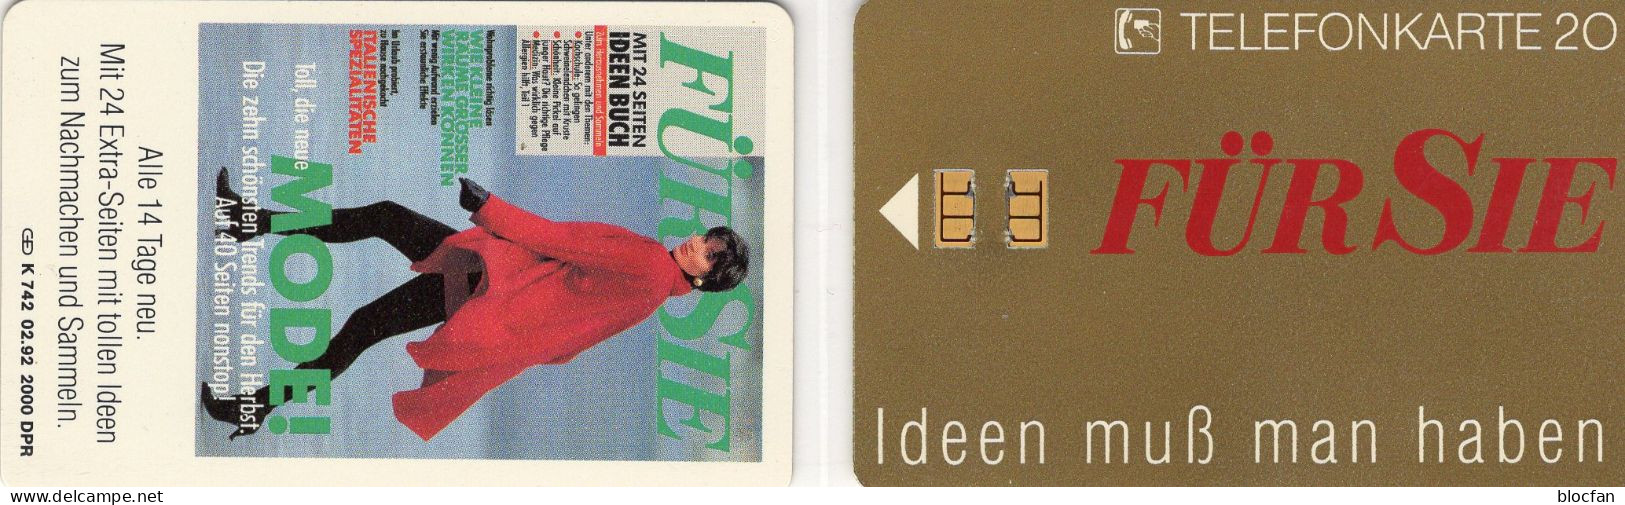 Mode Für Sie TK K 742/1992 O 40€ 2.000 Expl. O Buch Tolle Modeideen Muß Man Haben TC Woman Journal Phonecard Of Germany - Moda